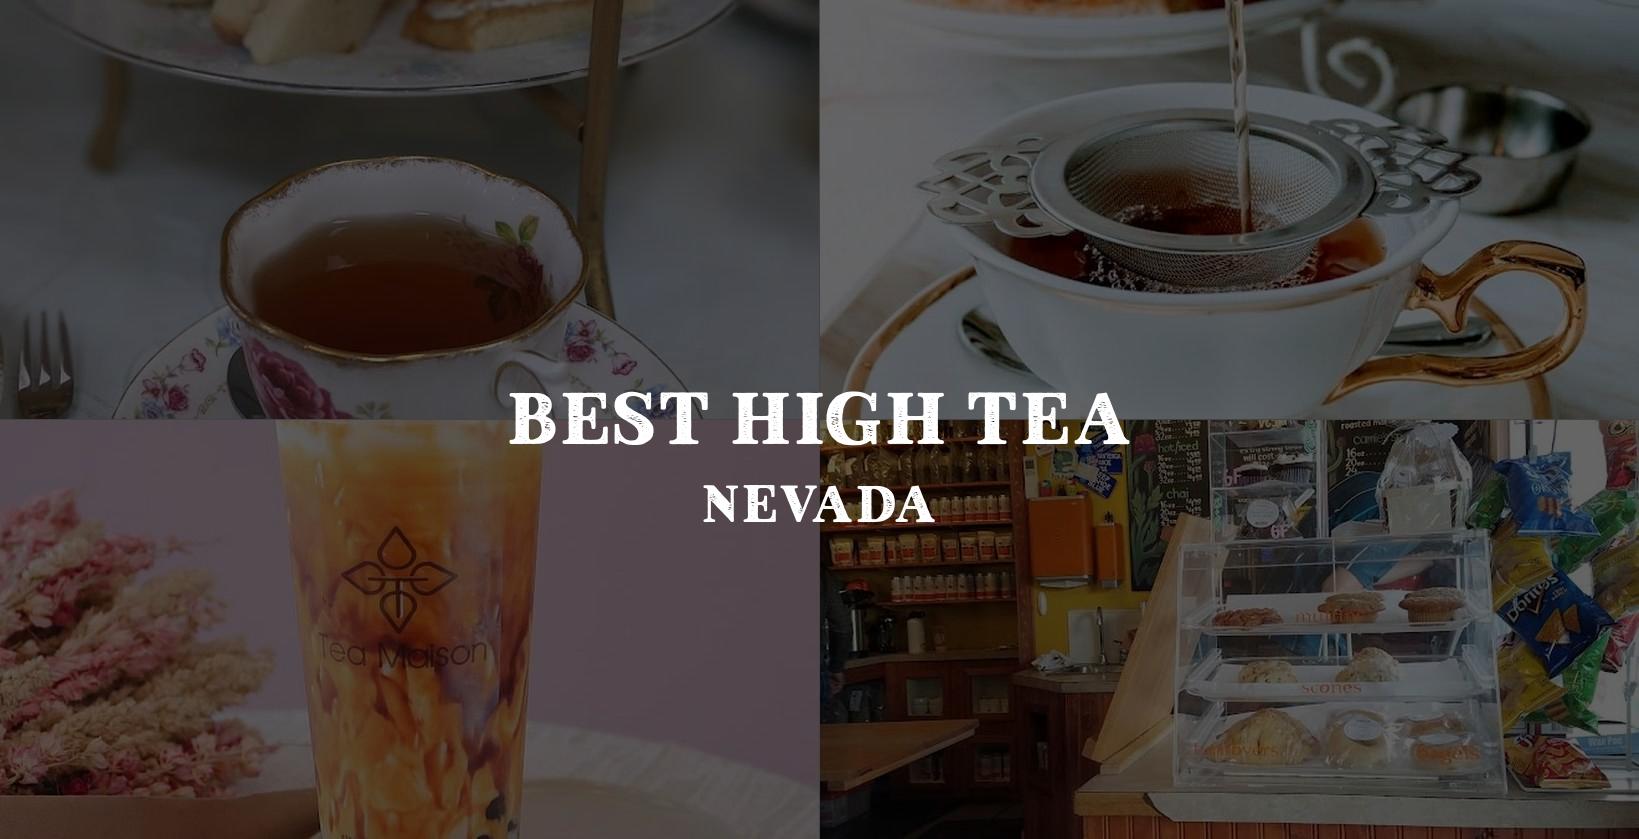 Choosing the right High Tea spot in Nevada